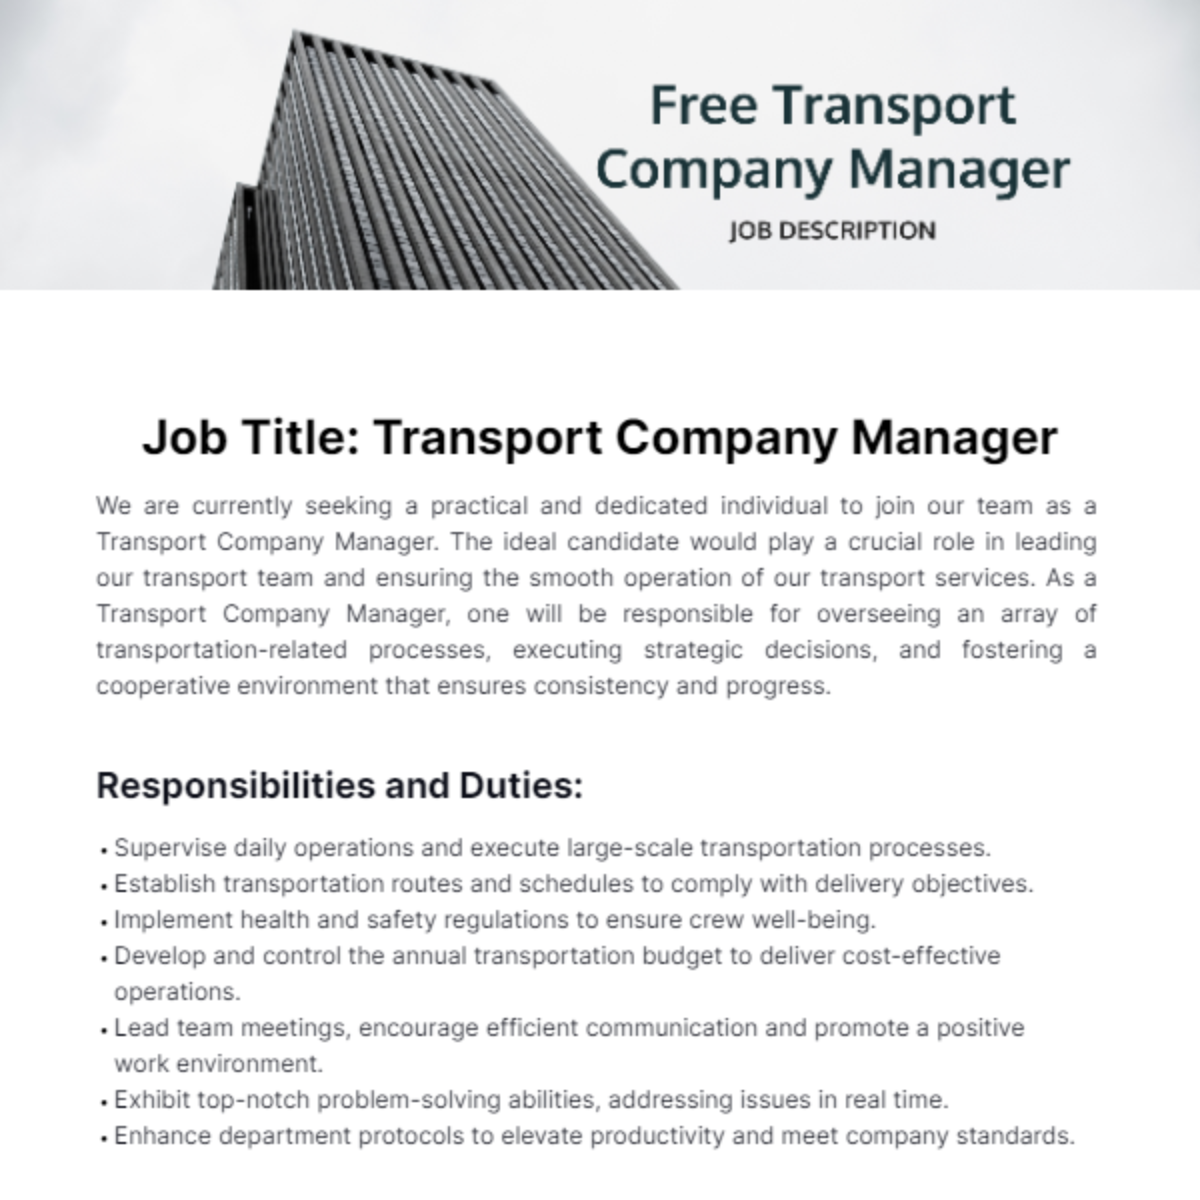 Free Transport Company Manager Job Description Template